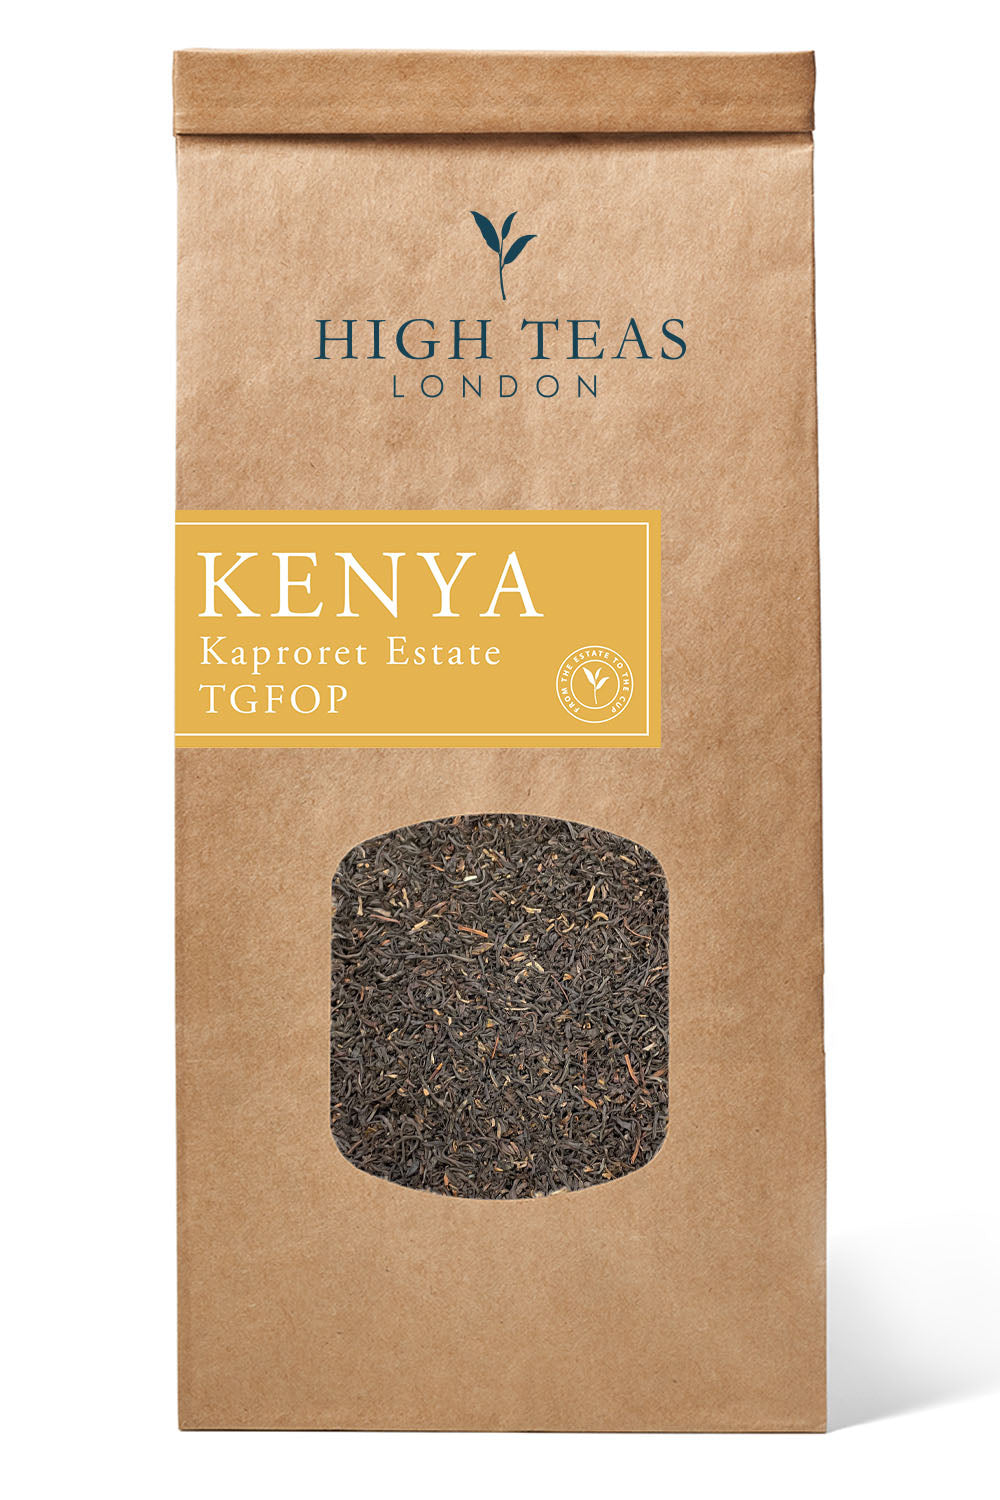 Kenya Kaproret Estate TGFOP-250g-Loose Leaf Tea-High Teas